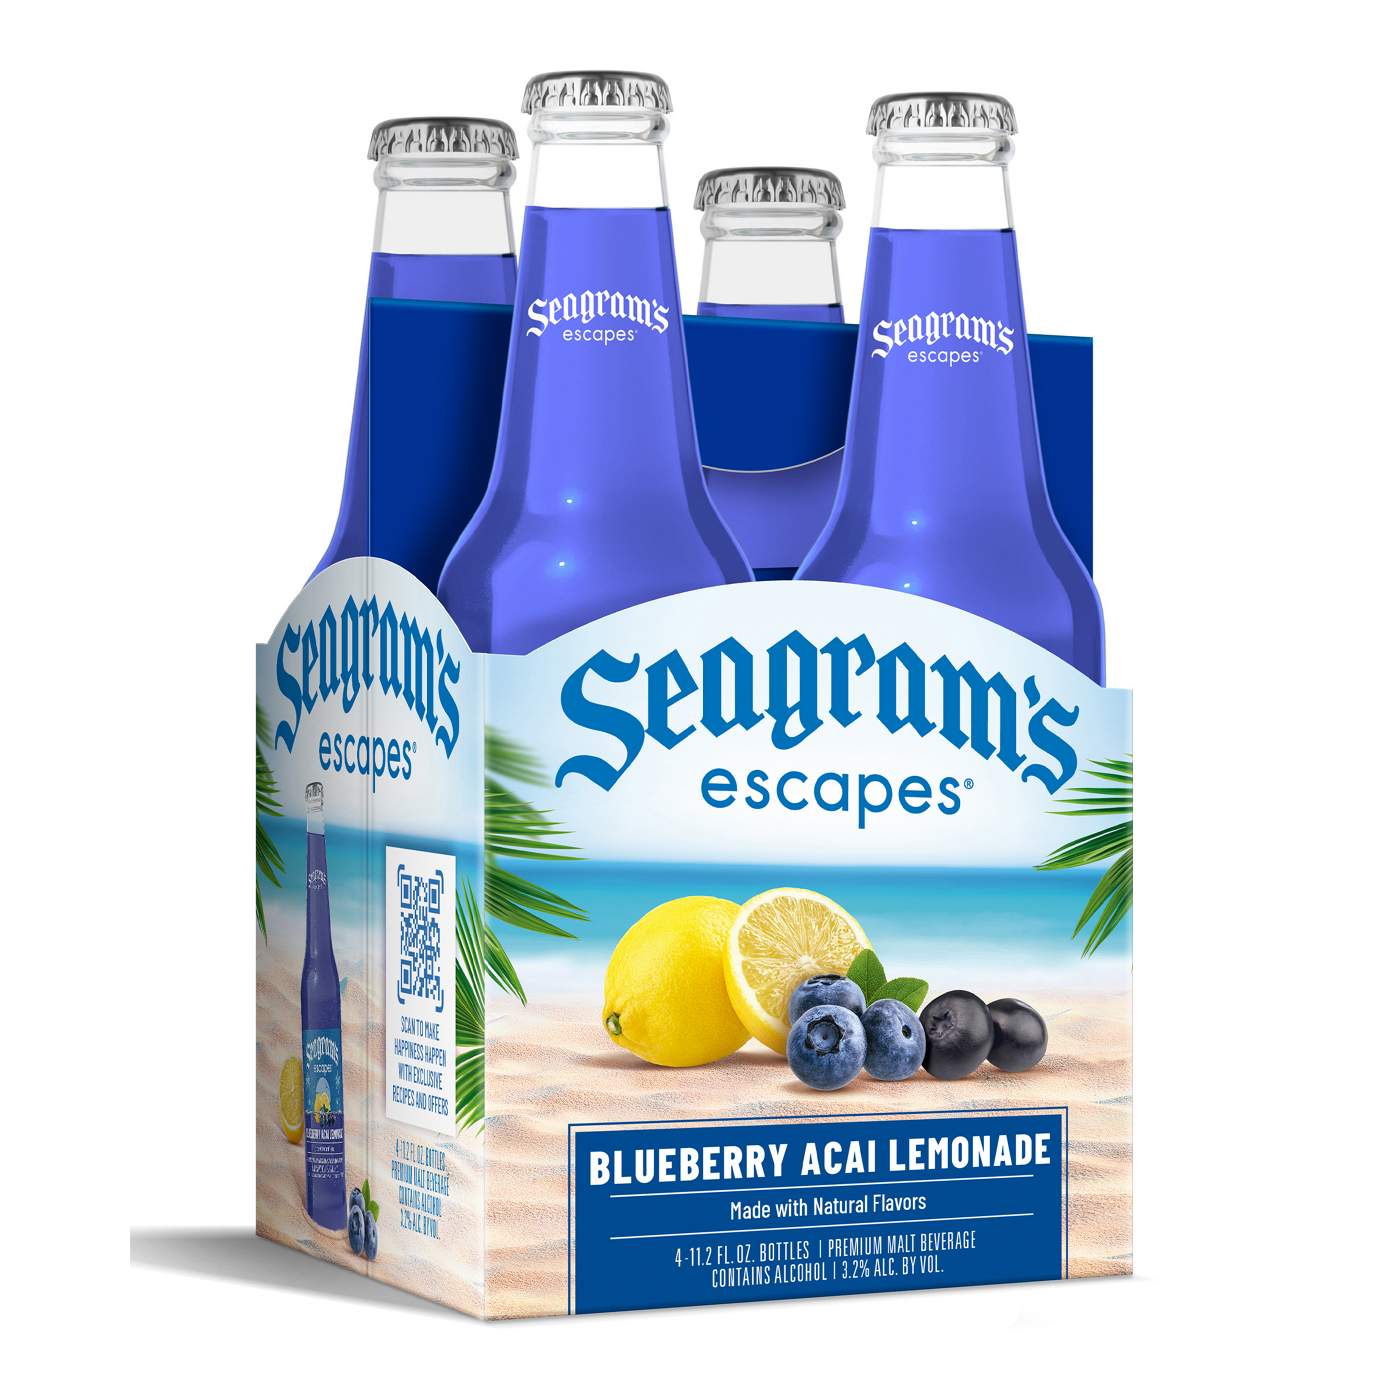 Seagram's Escapes Blueberry Acai Lemonade Bottles 4 pk; image 2 of 2